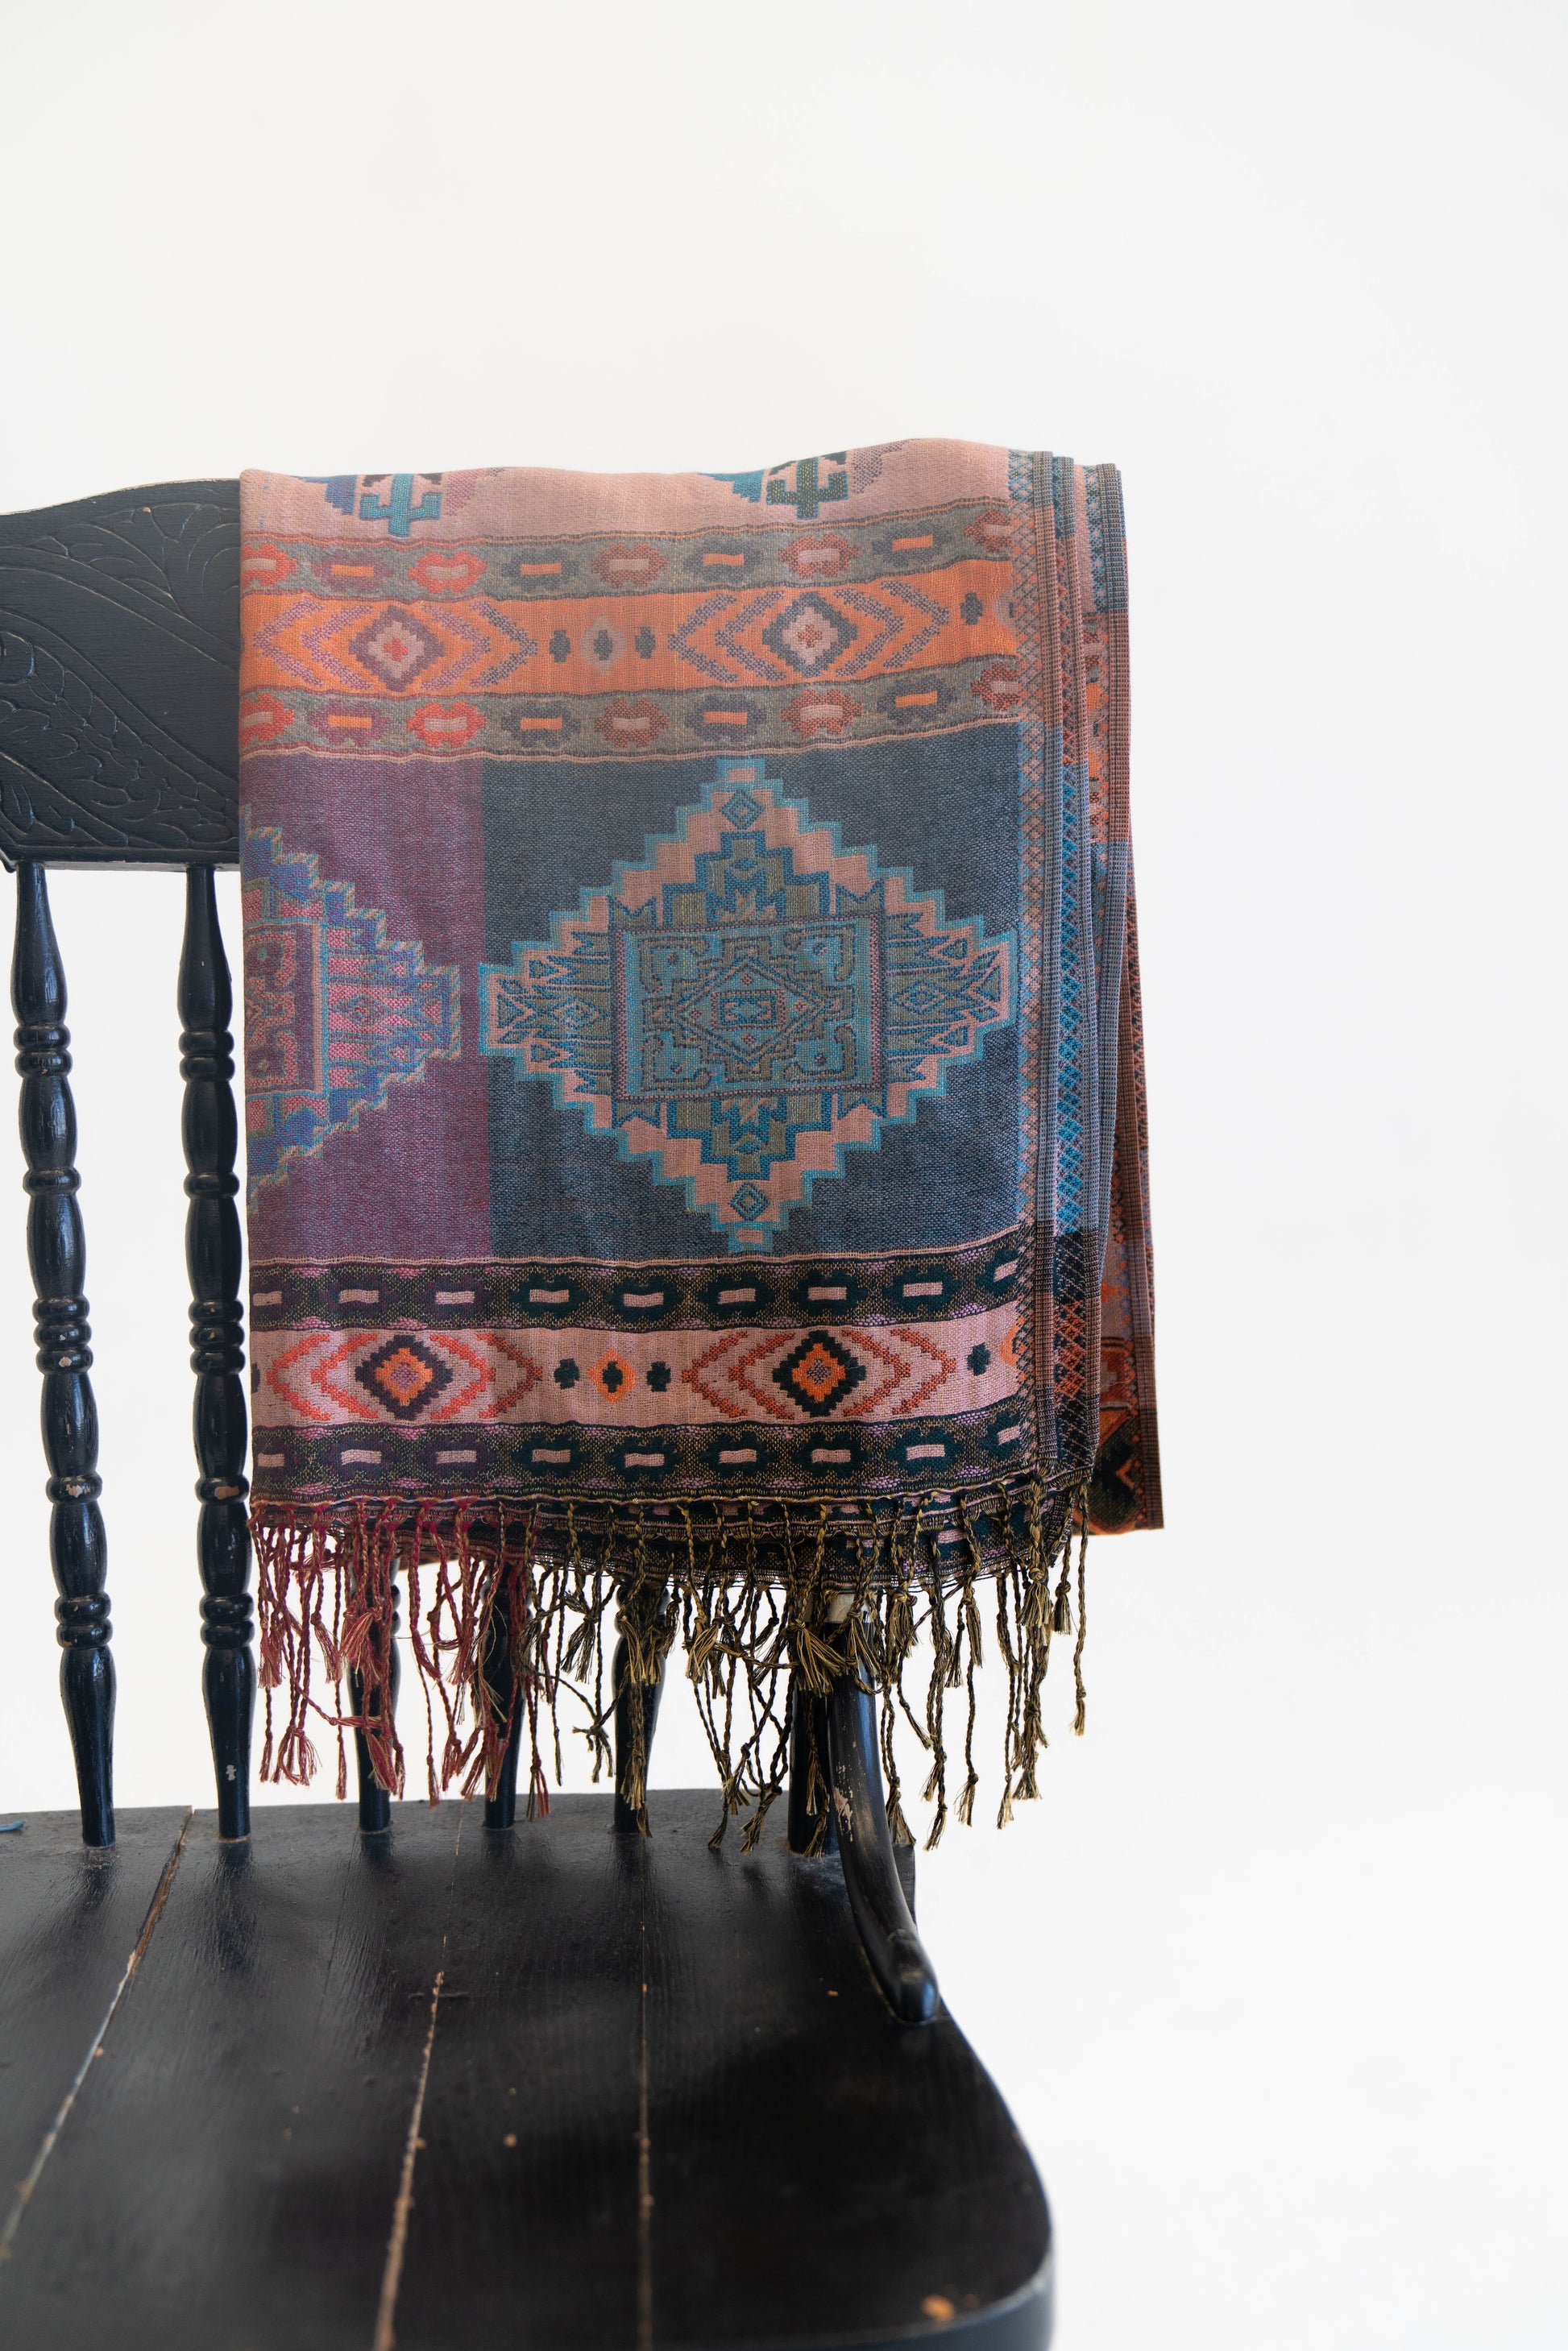 Isla Holbox Silk Table Cloth Decorative Runner- Pink Pueblo Designs